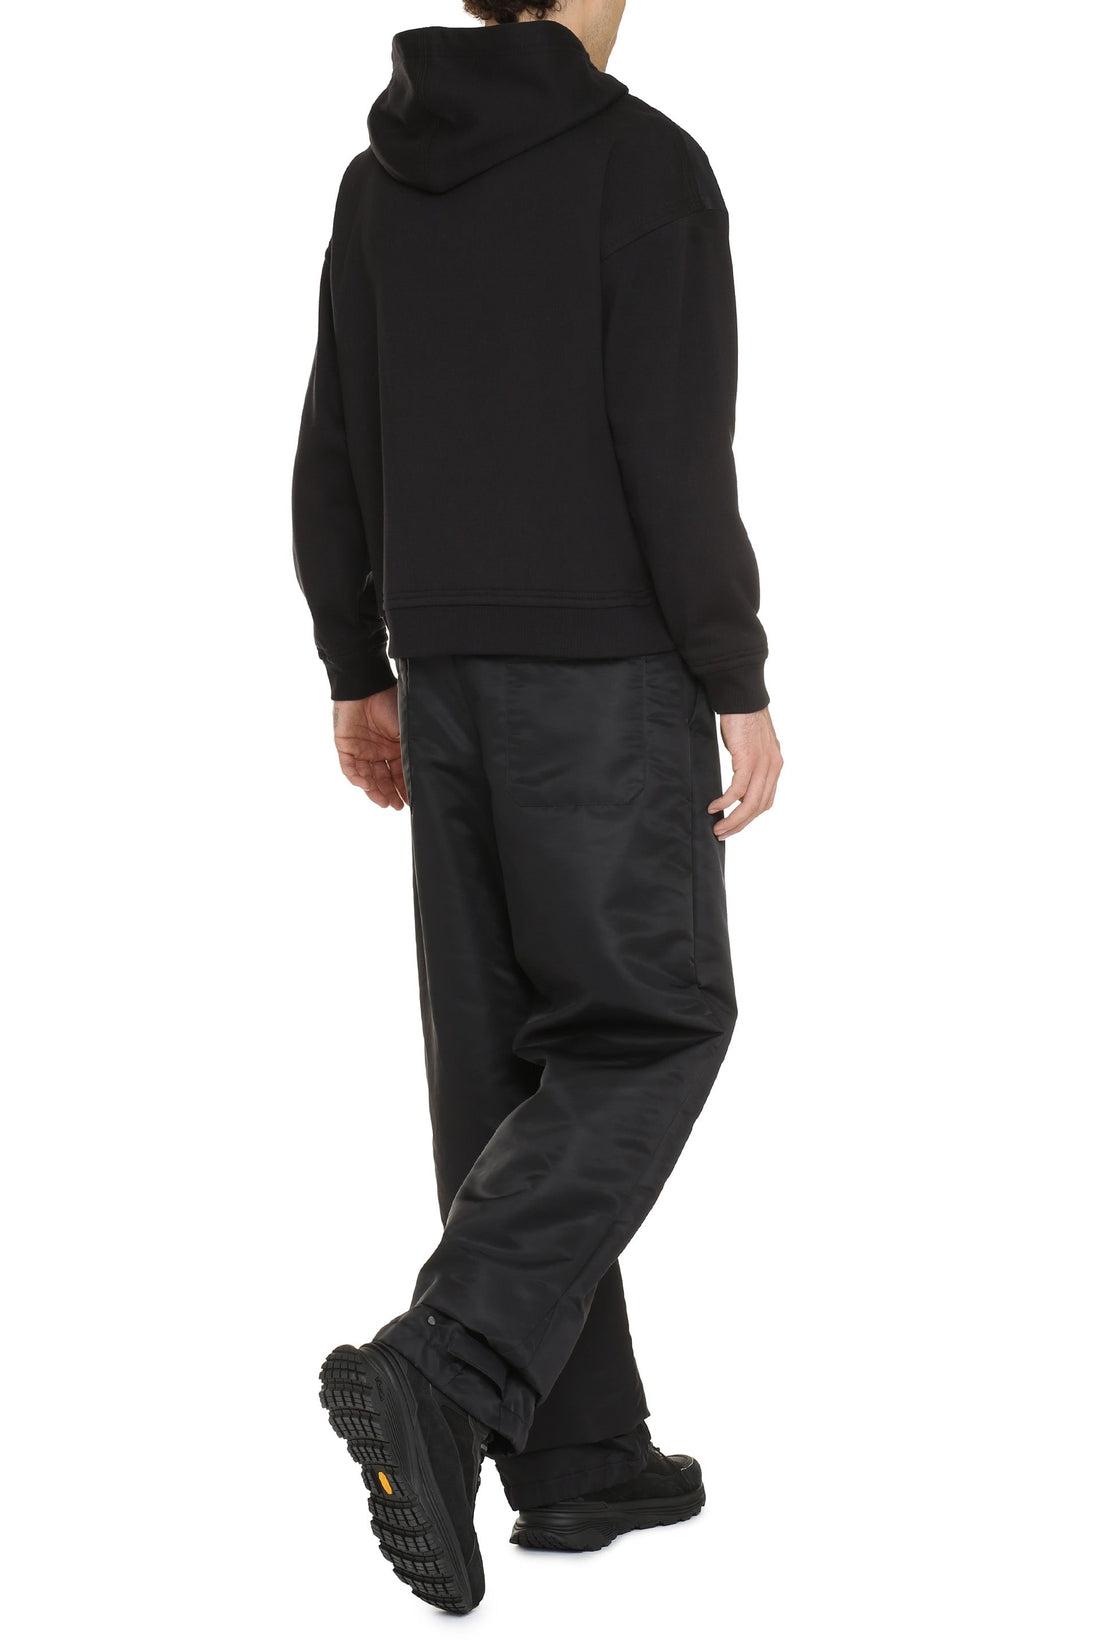 Valentino-OUTLET-SALE-Hooded sweatshirt-ARCHIVIST